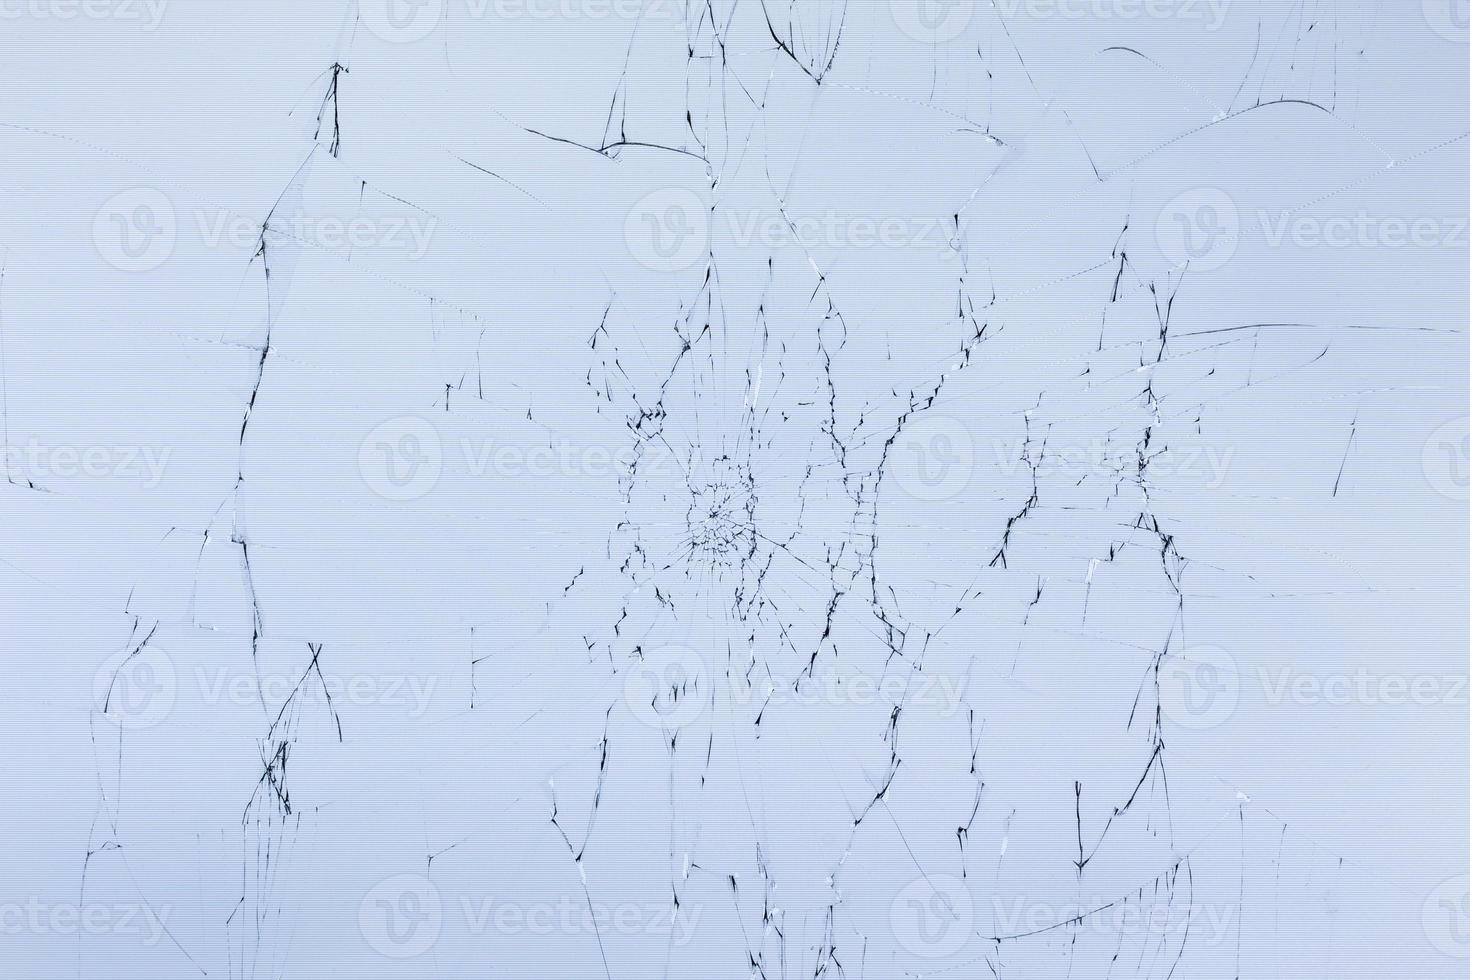 textura plana de tela tft lcd de vidro rachado com rachaduras radiais localizadas foto